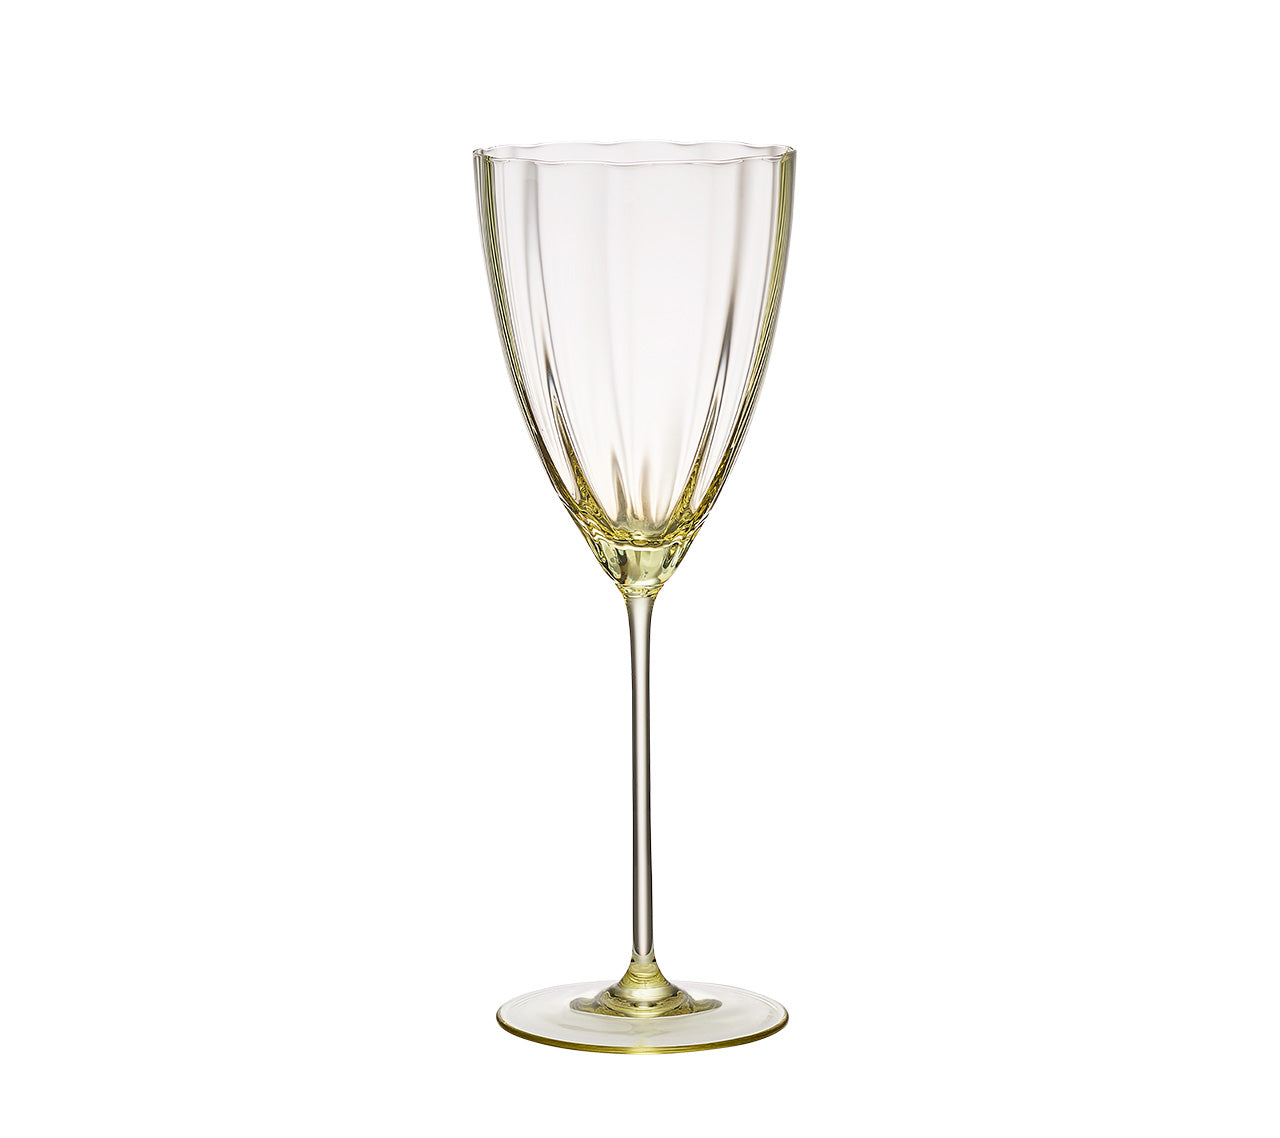 Luna Wine Glass in Citrine, Set of 4 | Kim Seybert Luxury